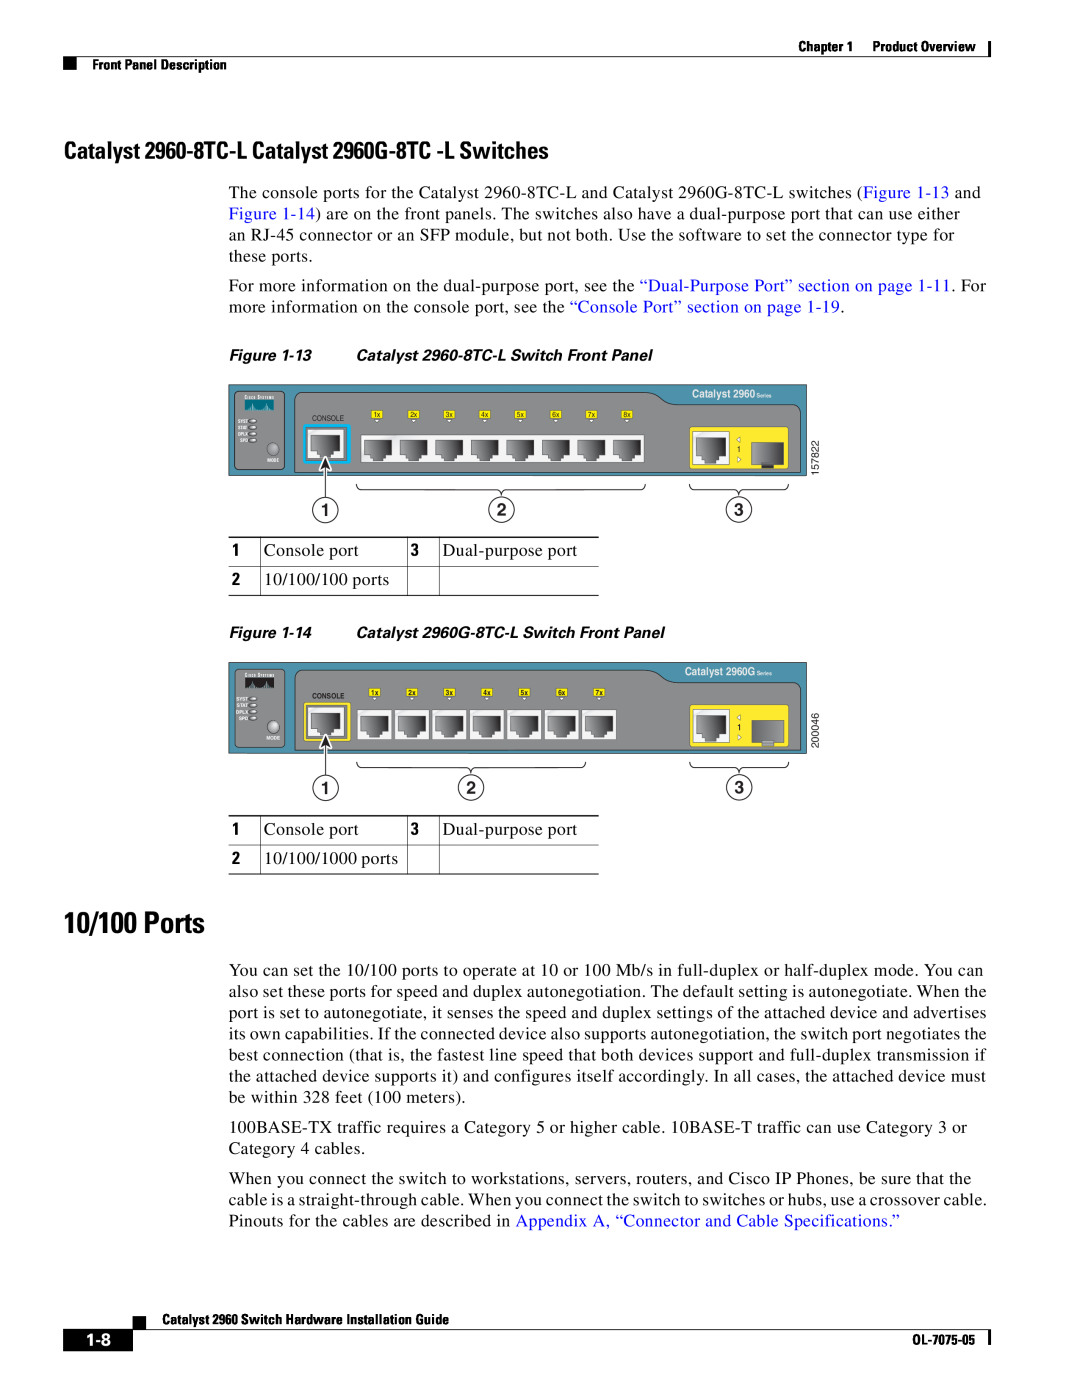 Cisco Systems 10/100 Ports, Catalyst 2960-8TC-L Catalyst 2960G-8TC -L Switches, Console port, Dual-purpose port 